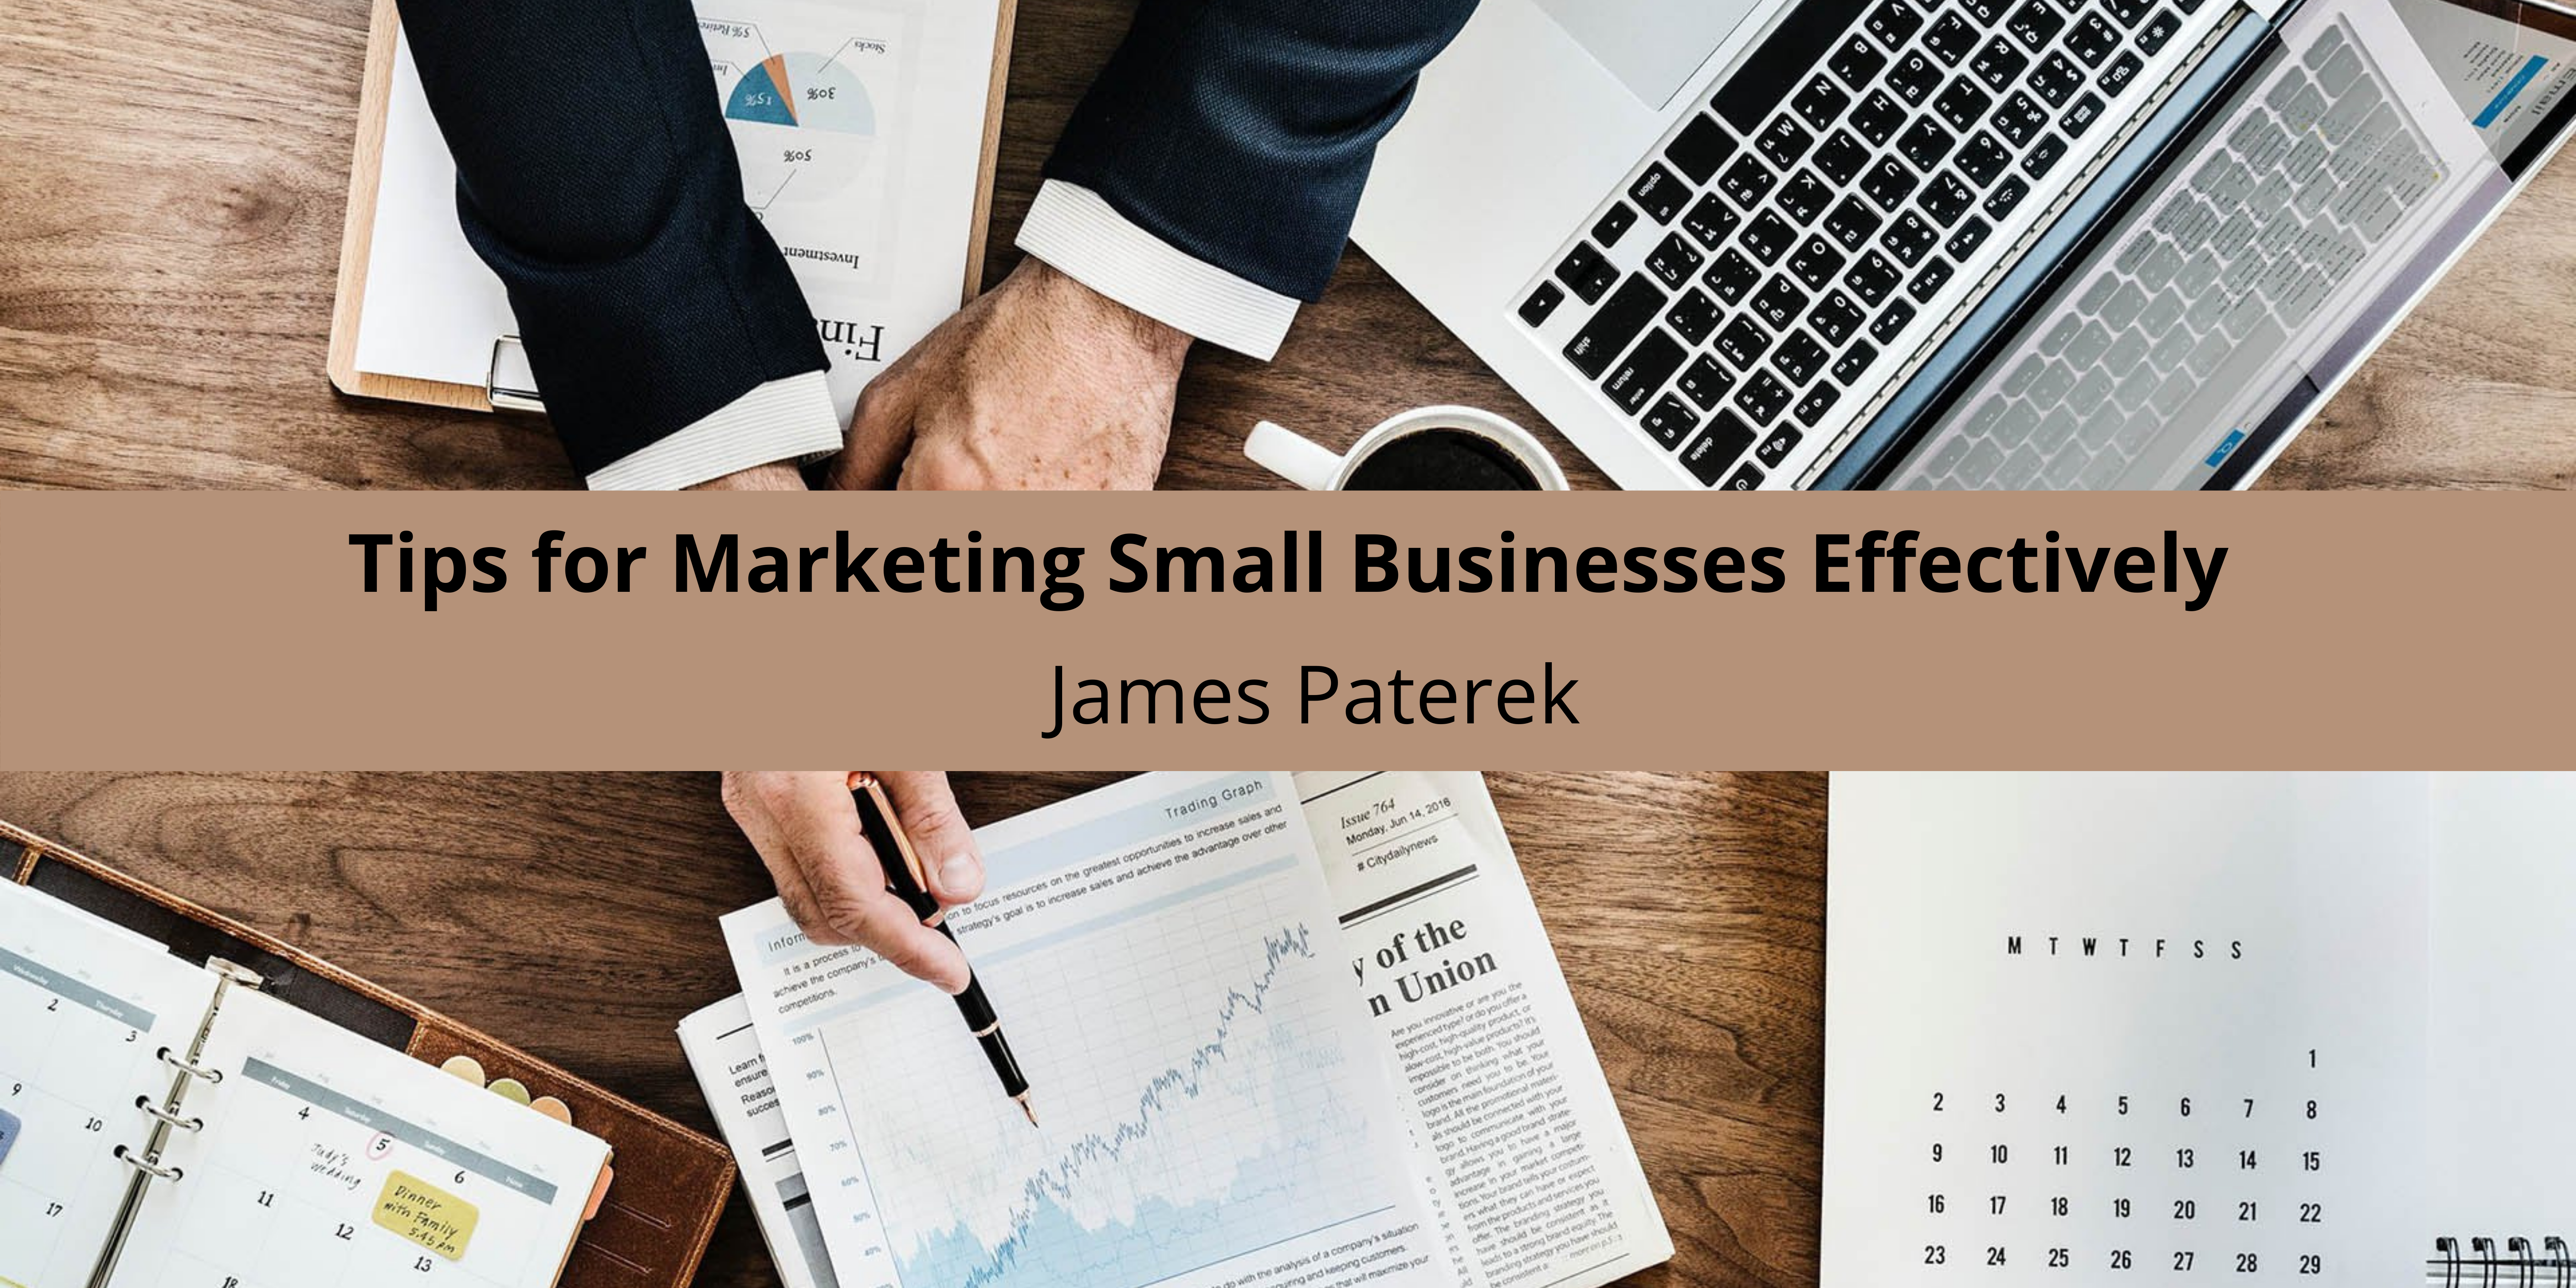 James Paterek Provides Tips for Marketing Small Businesses Effectively